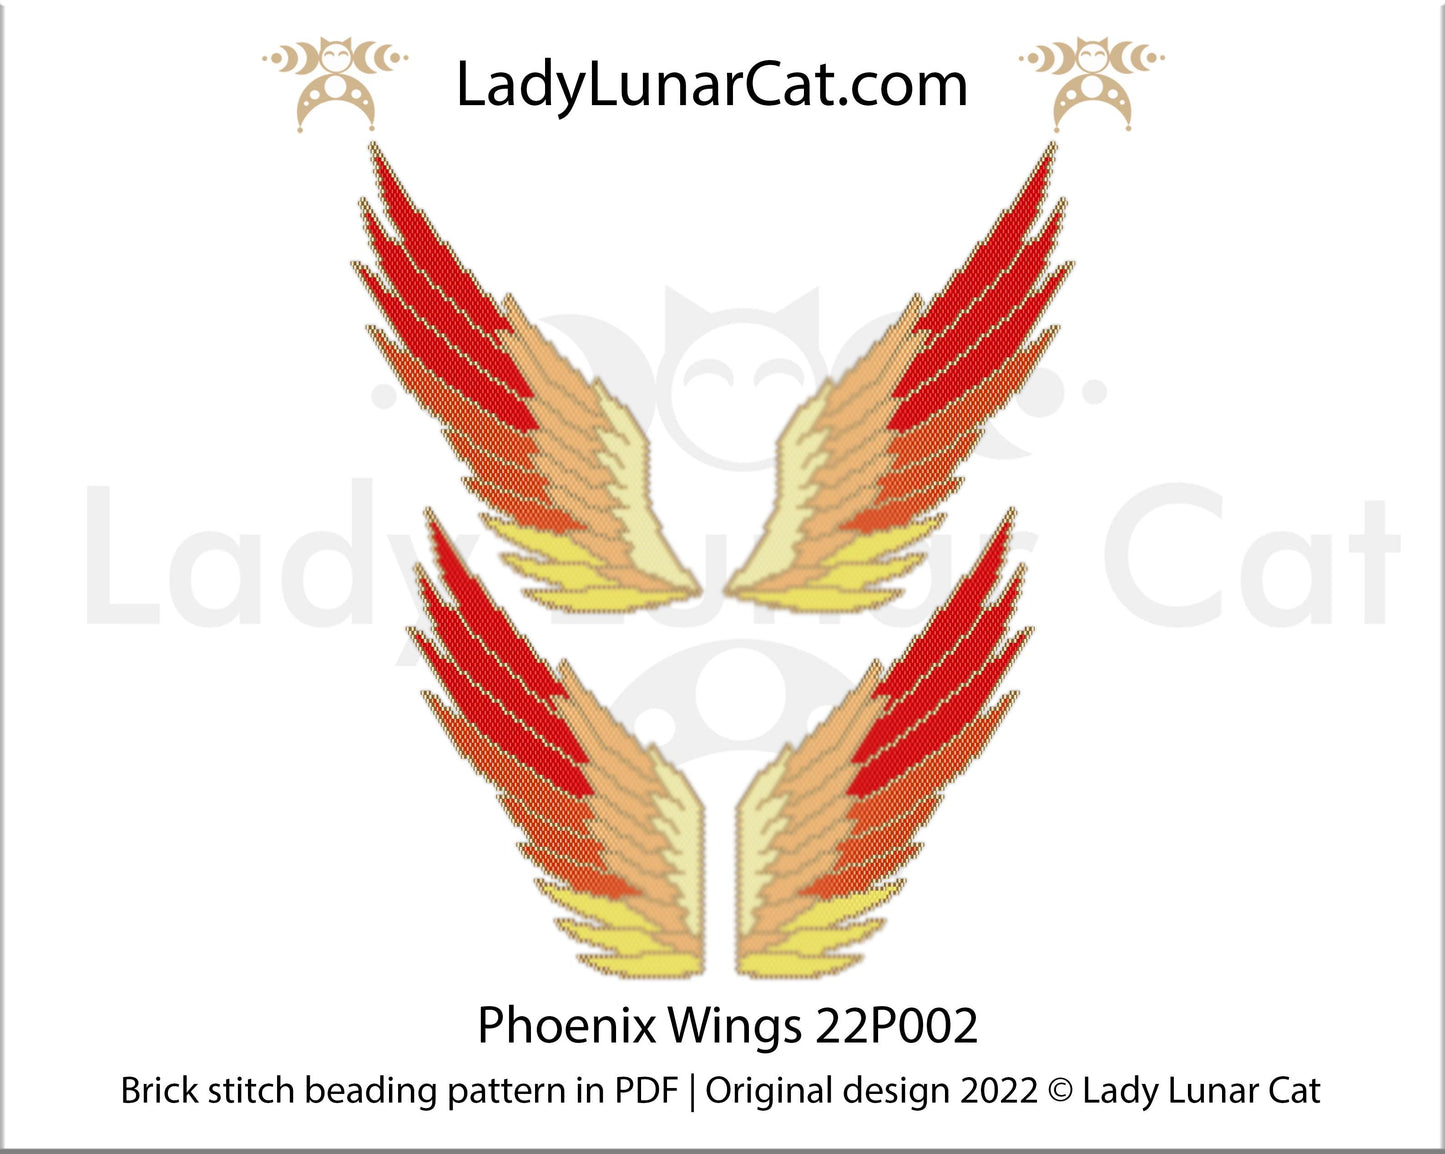 Brick stitch pattern for beading Phoenix Wings 22P002 LadyLunarCat